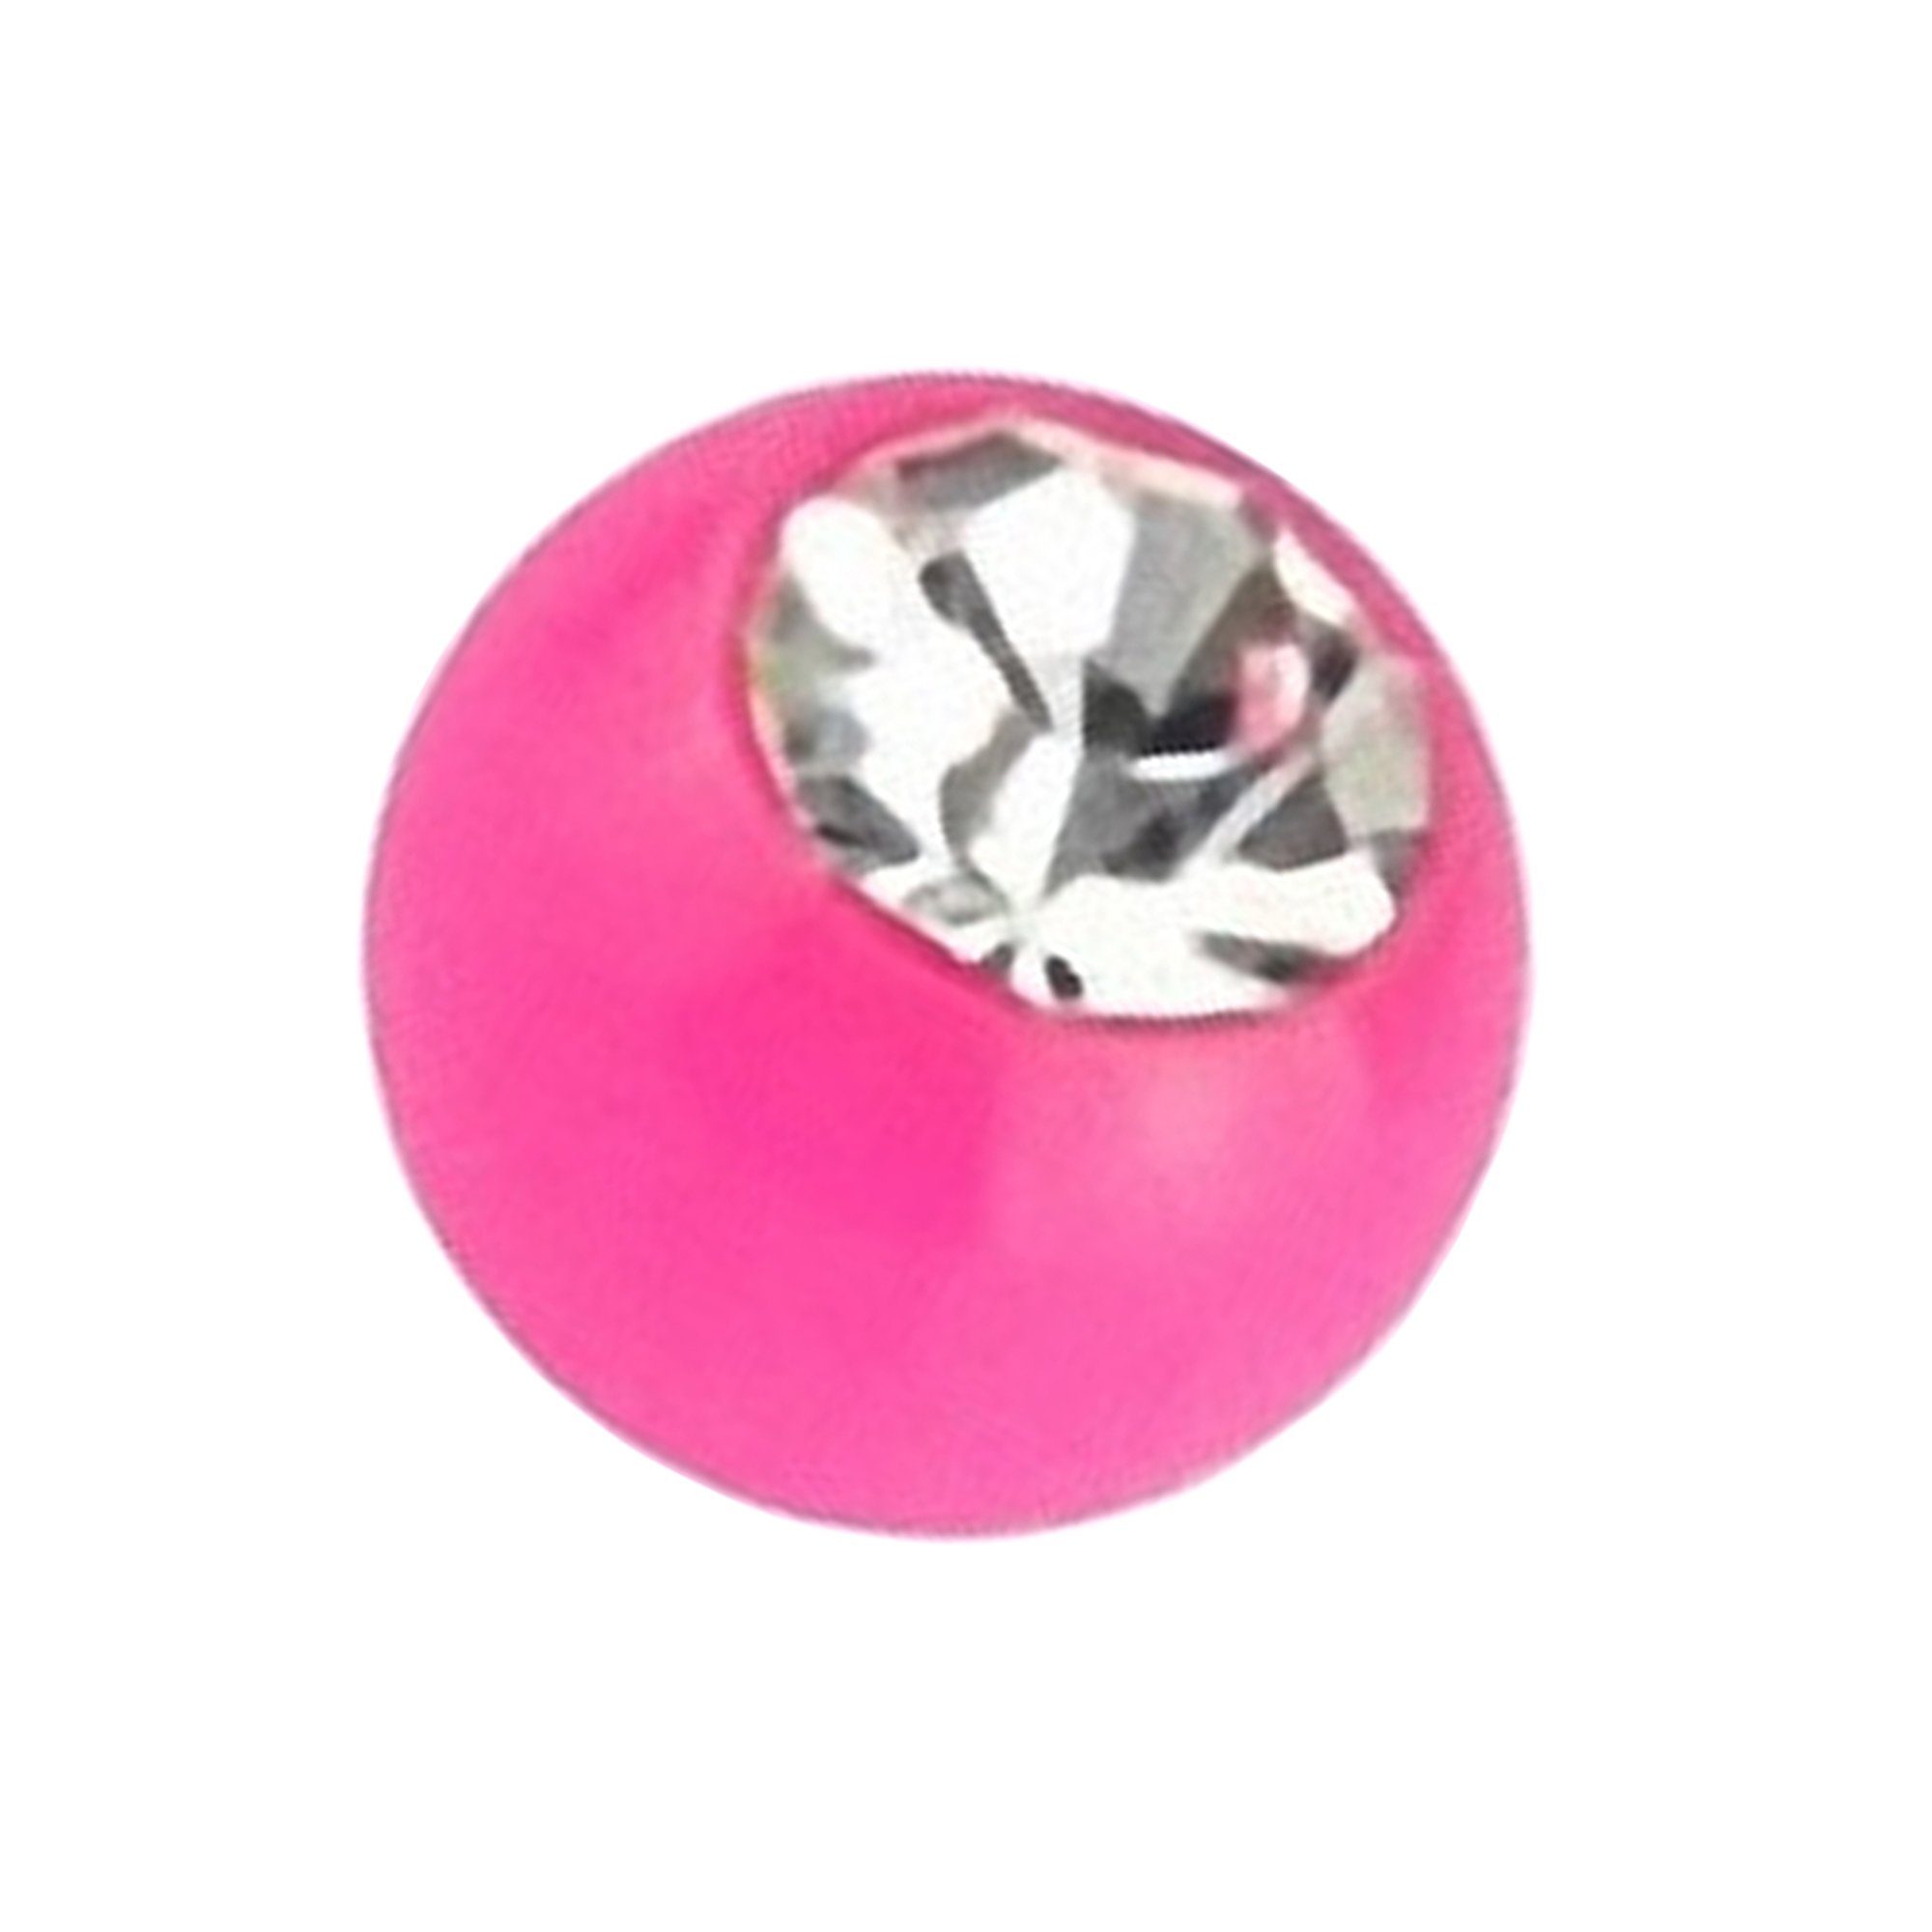 Verschluss Piercing-Set Kristall Ersatzteile Kugel Schraubkugel Ersatz Innengewinde verschiedenen, Piercing in UV Verschlusskugel Pink Taffstyle